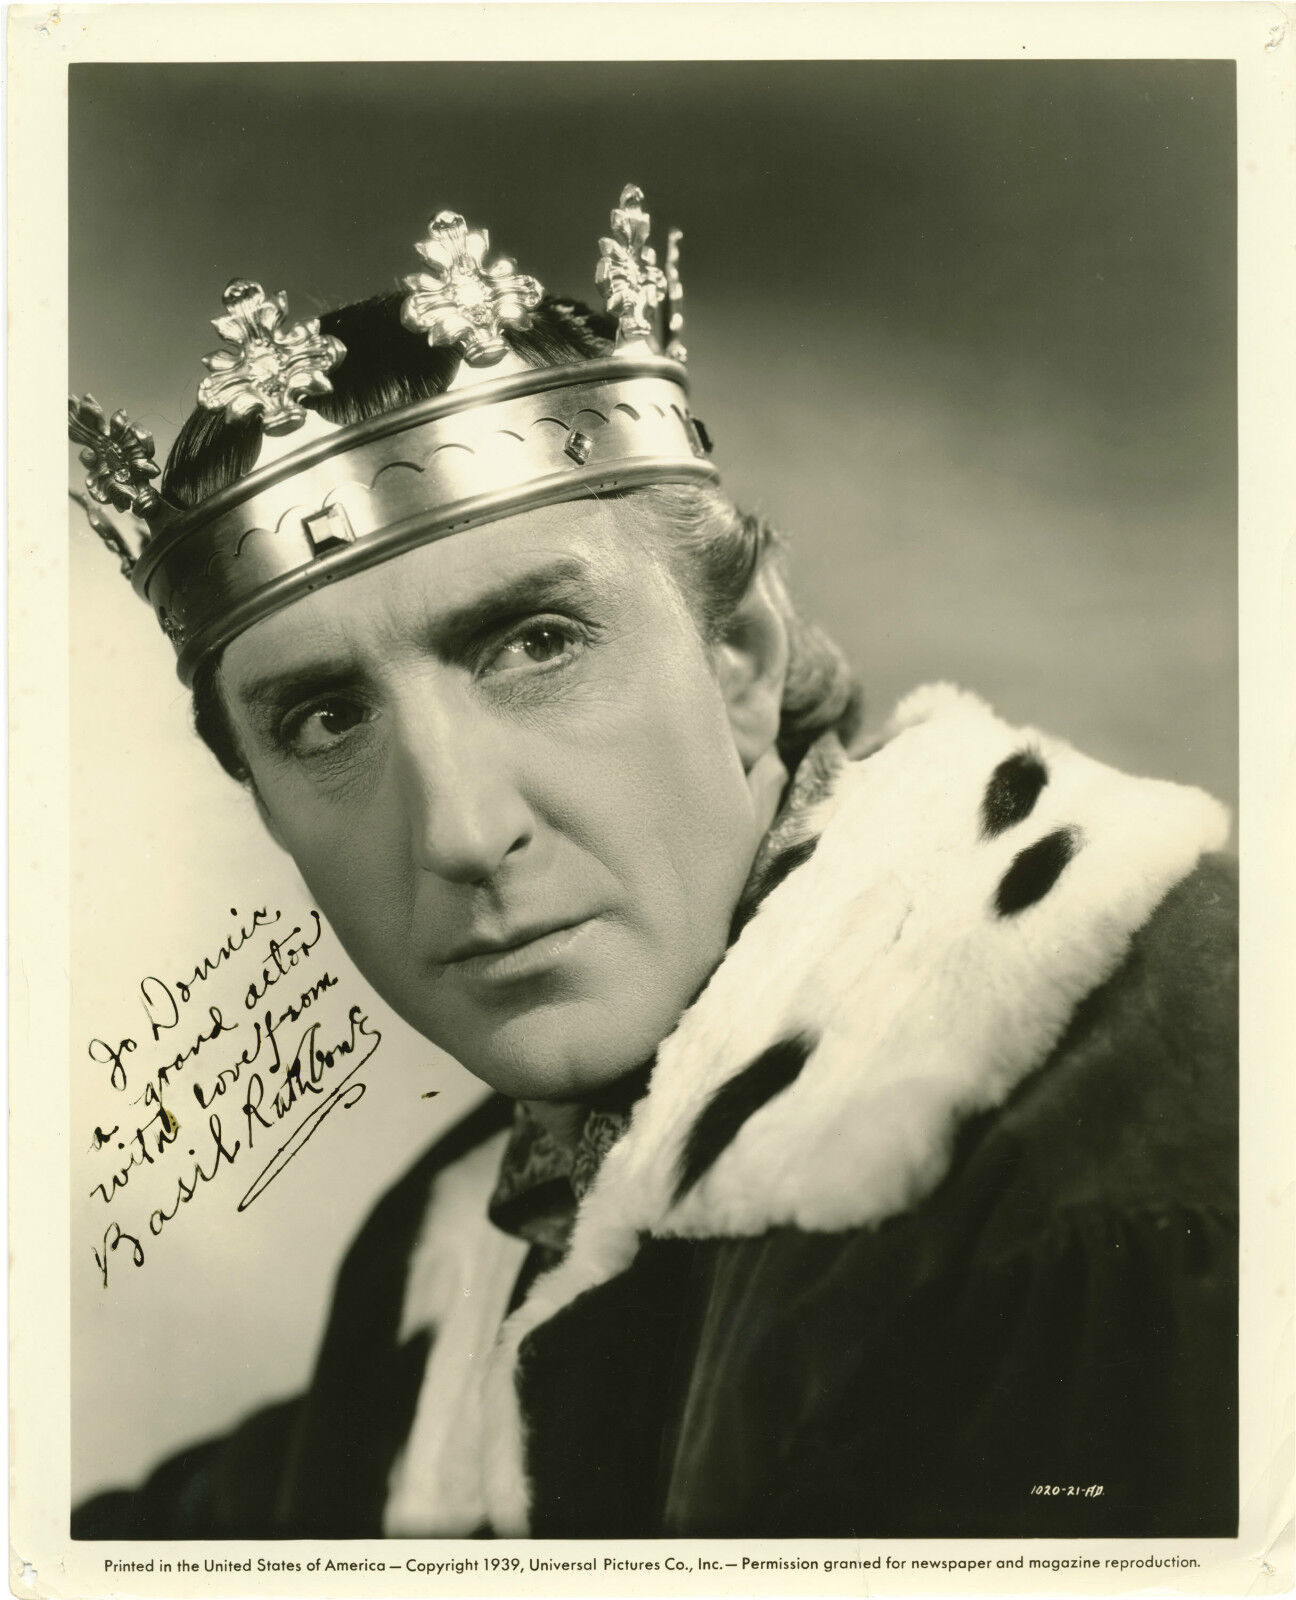 BASIL RATHBONE Signed Photo Poster paintinggraph - Film Actor 'Richard III' - Preprint